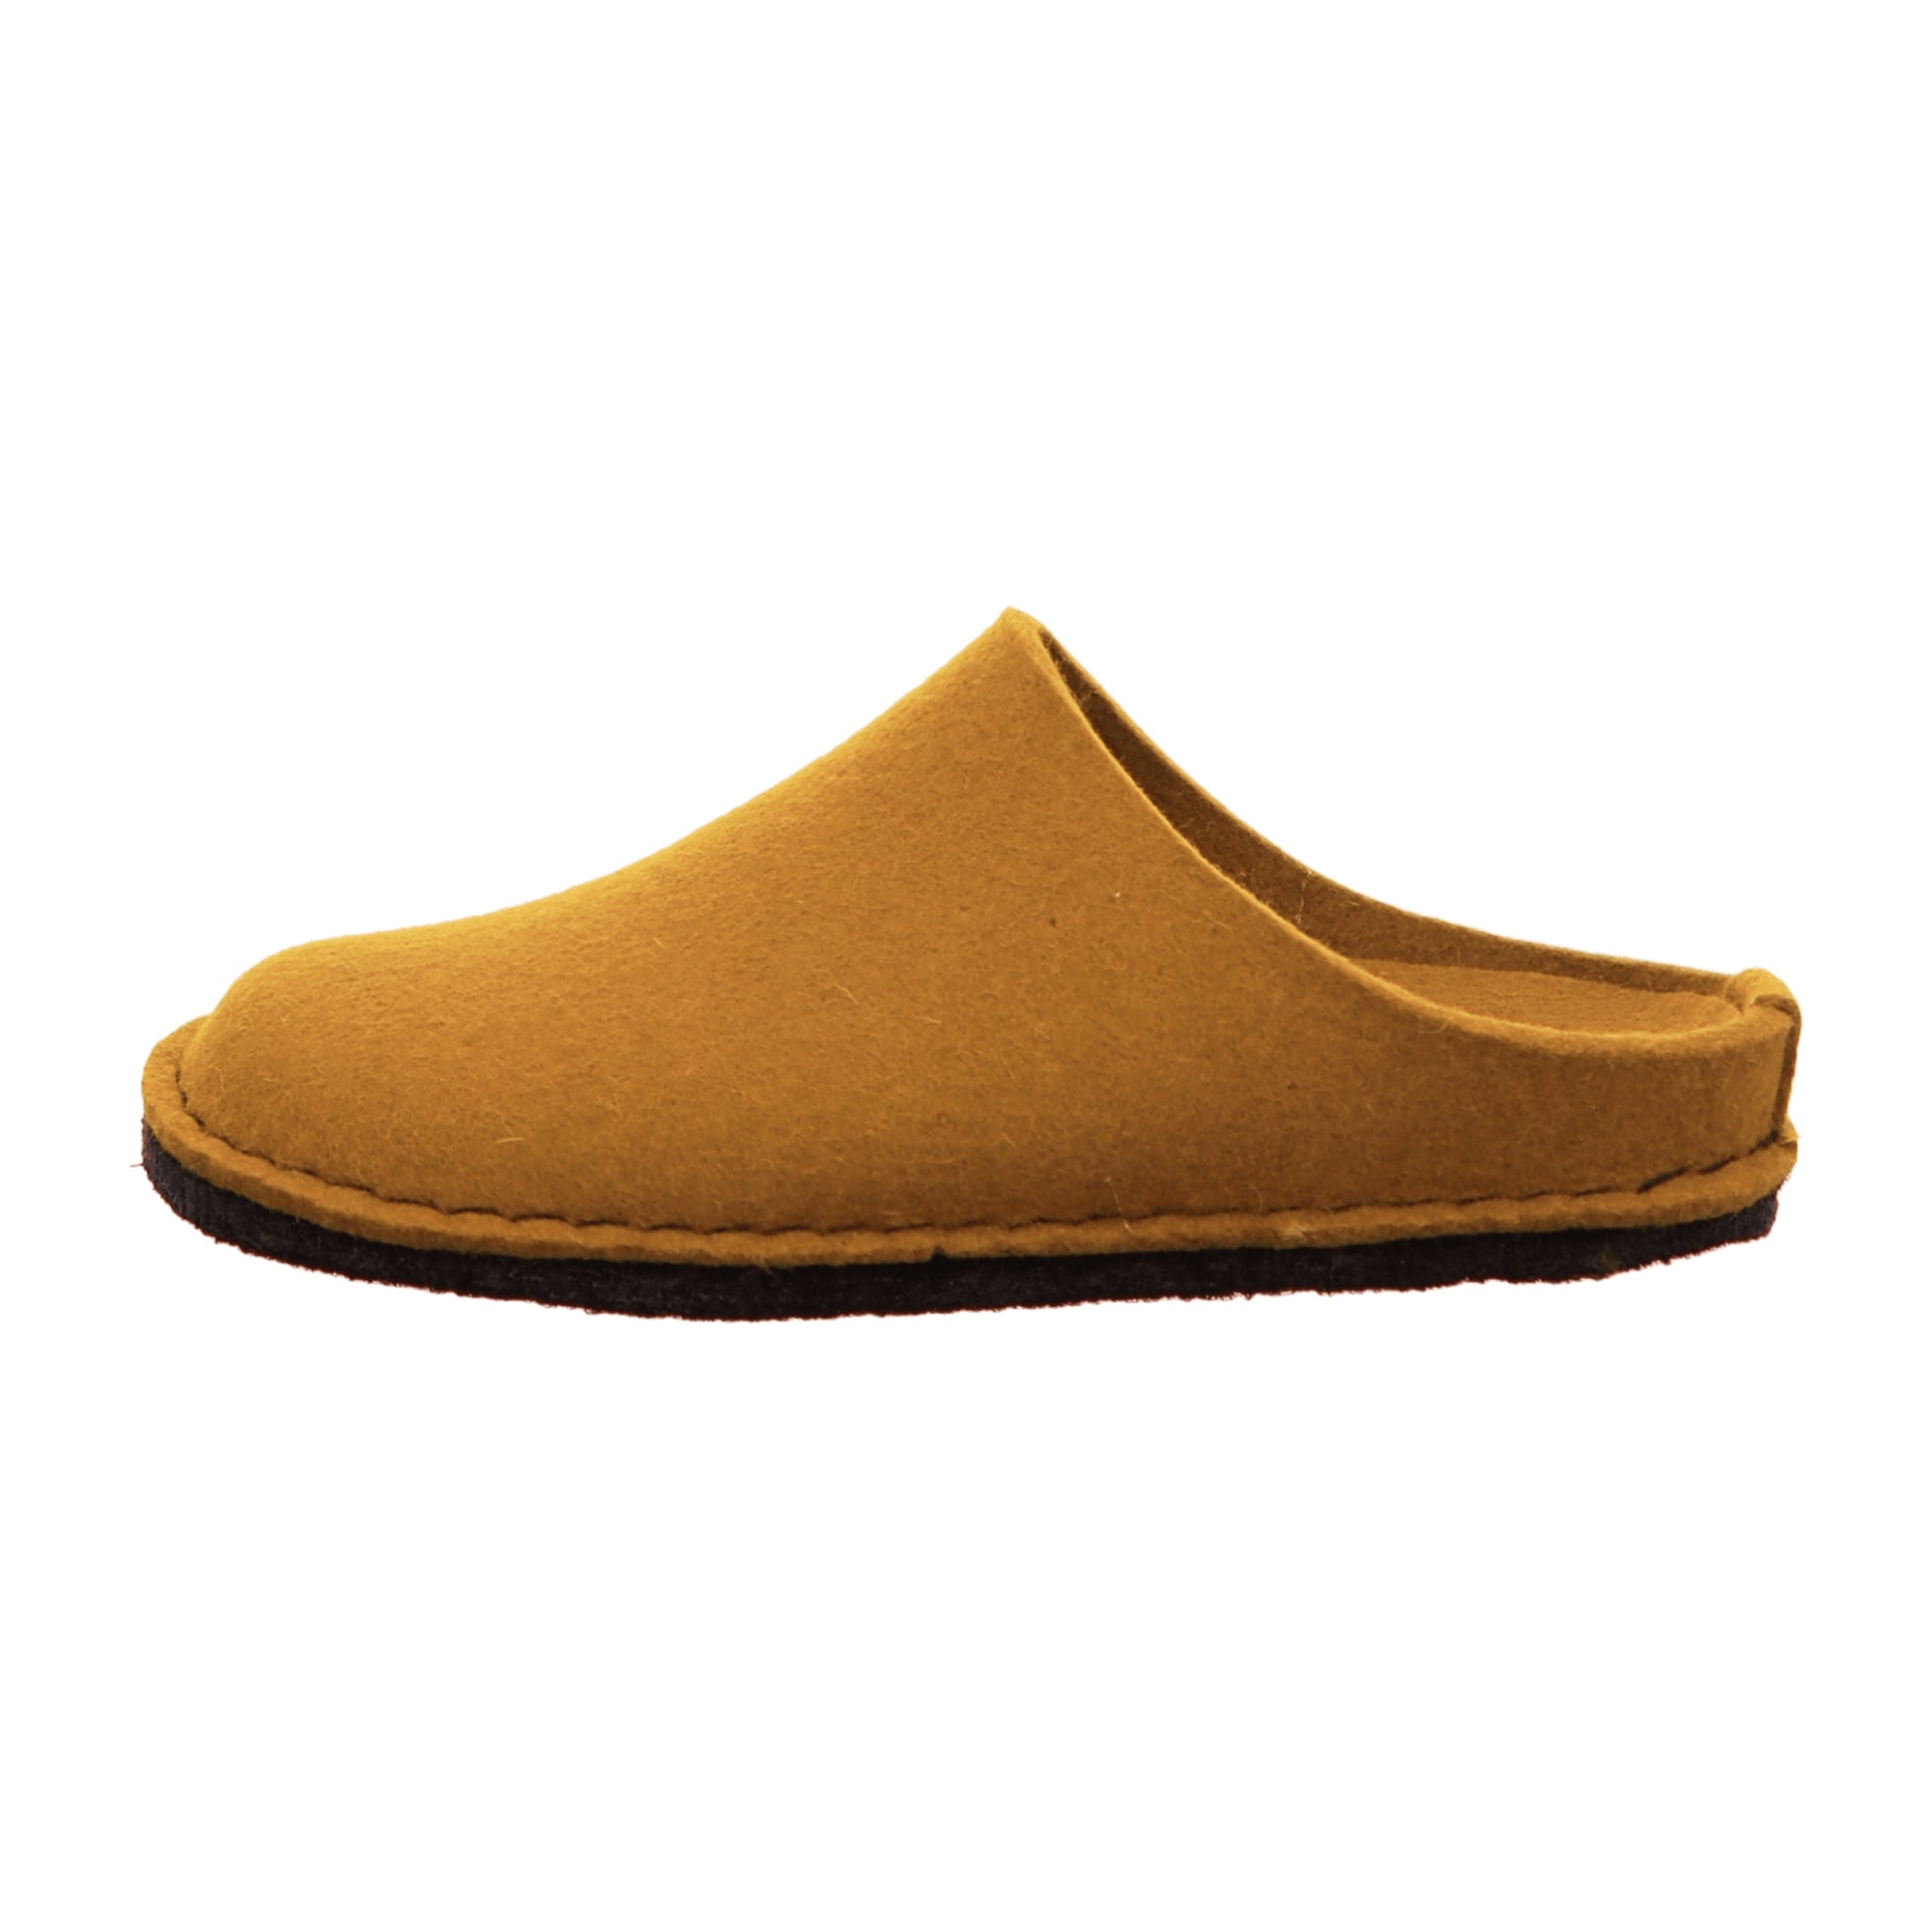 Haflinger Women's Slippers, Yellow - Stylish & Durable Indoor Footwear